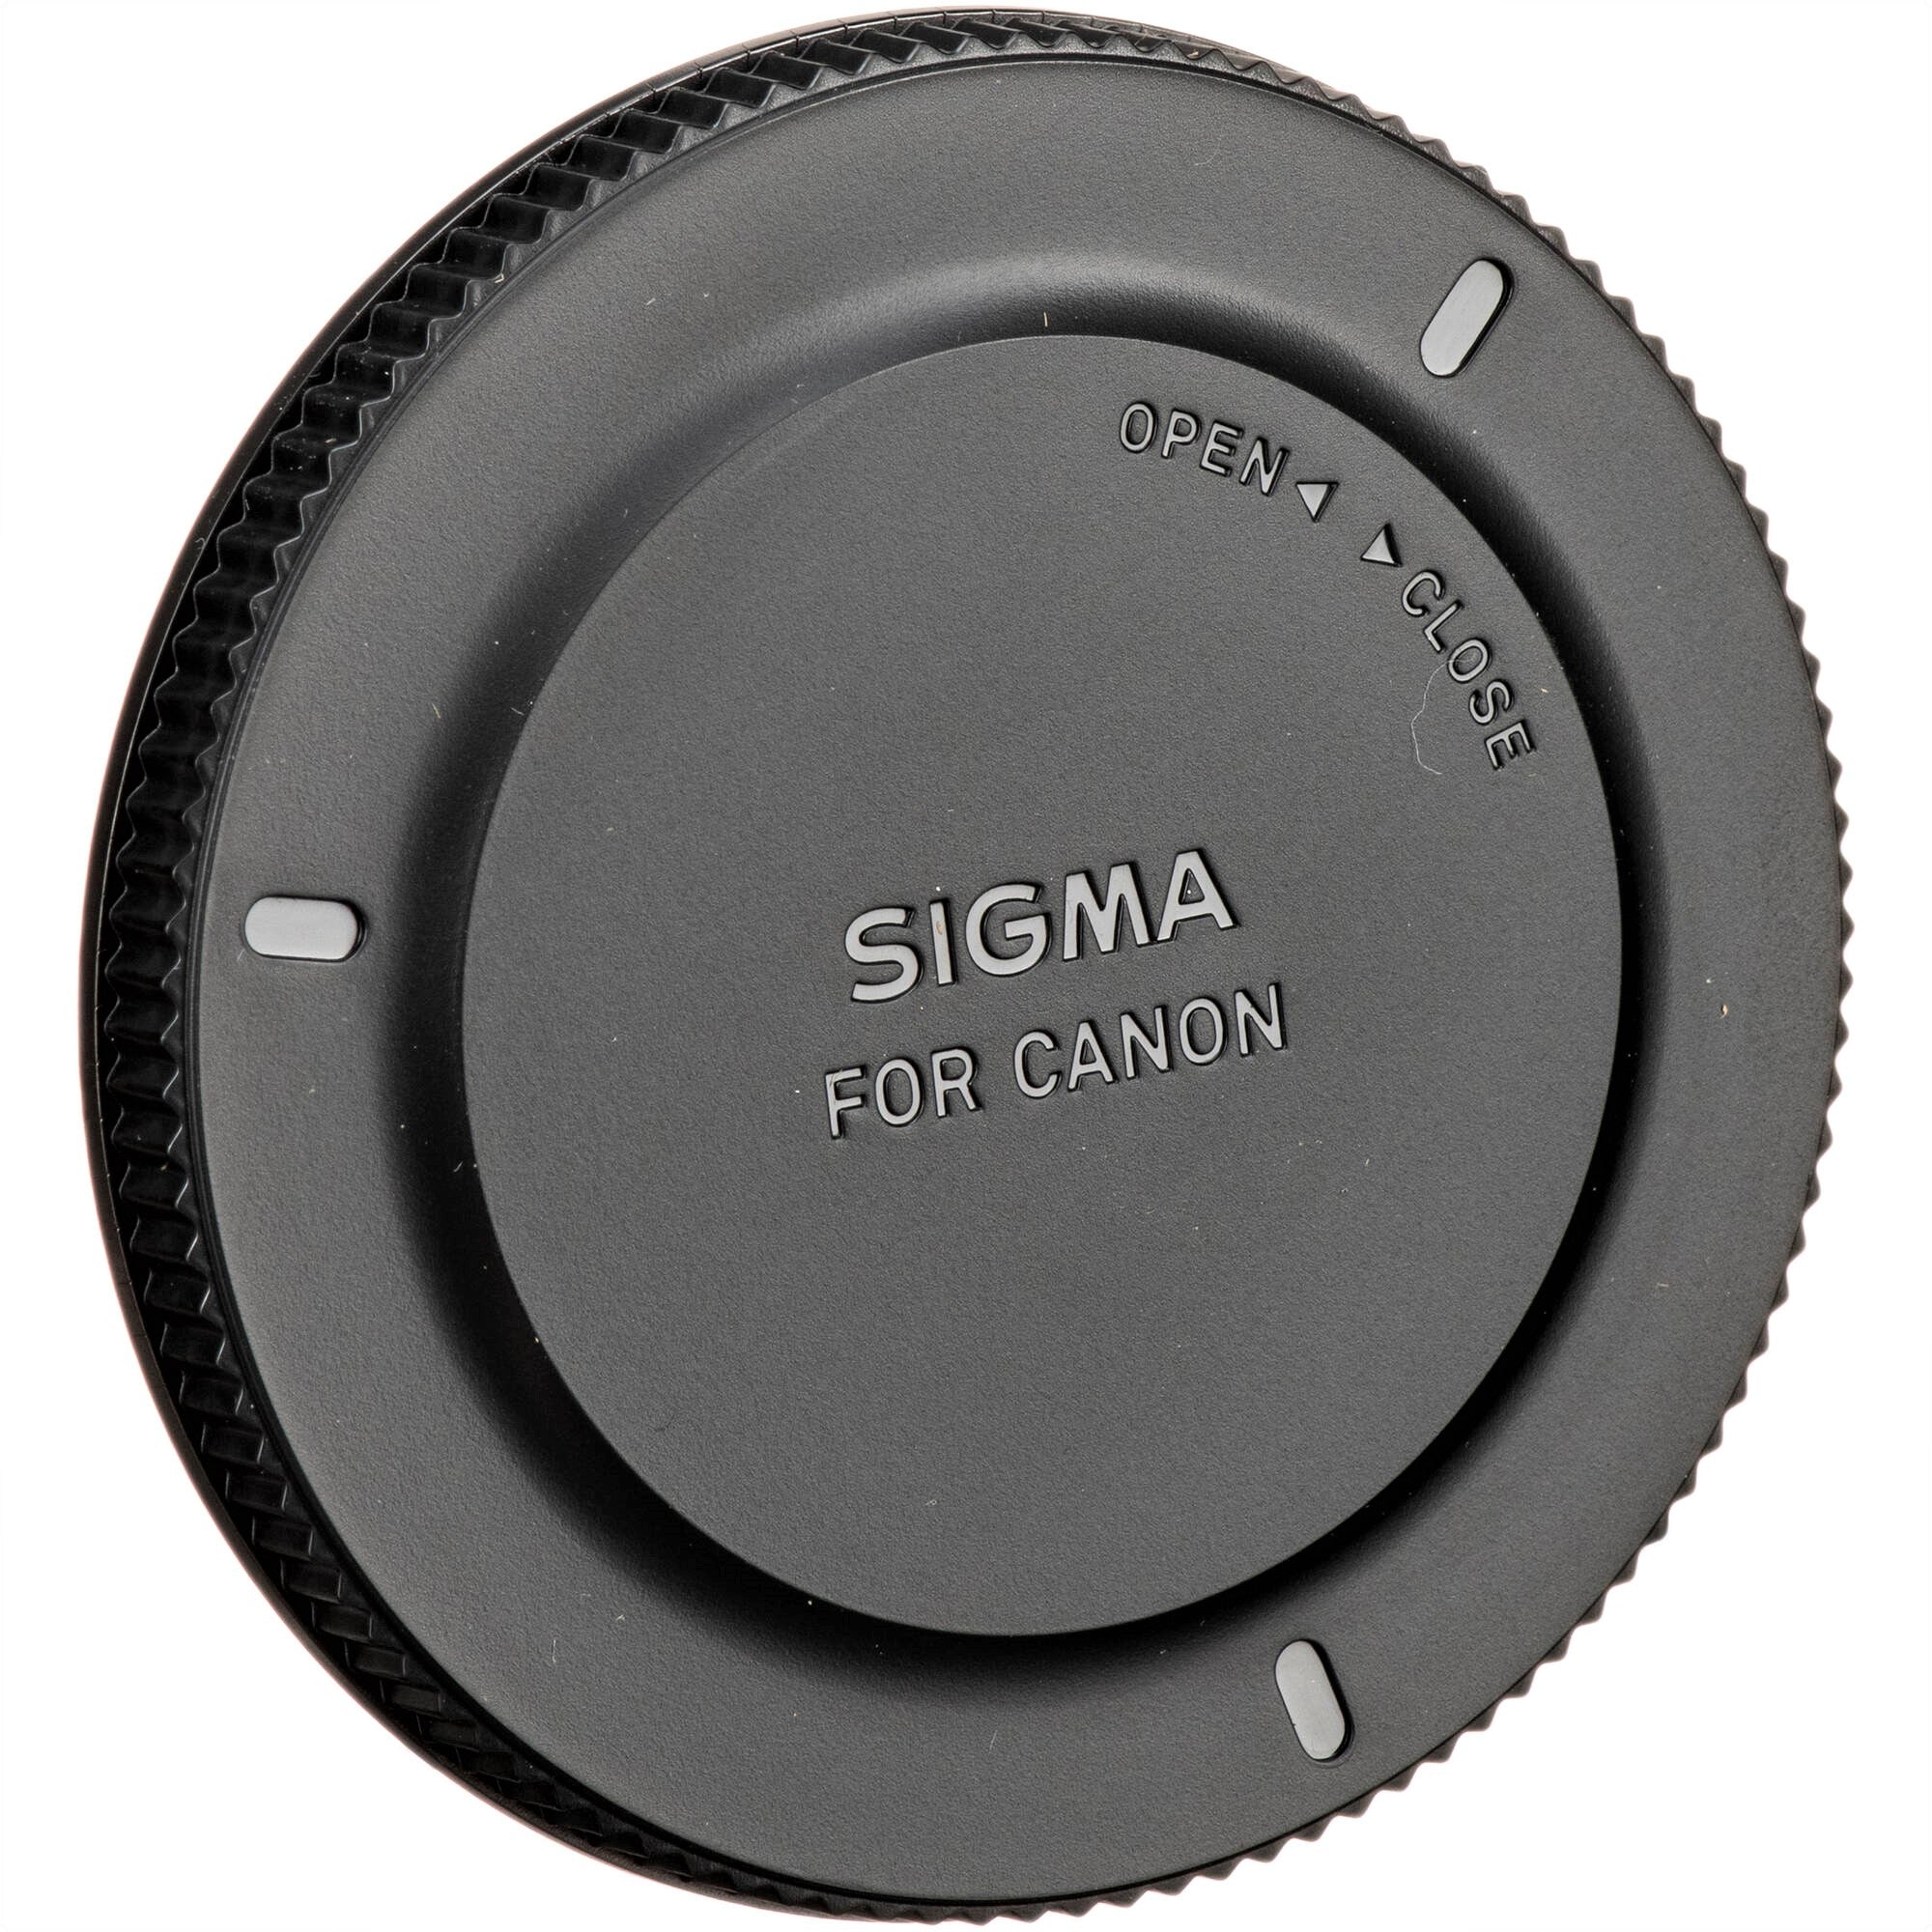 Sigma Body Cap for Canon EF Mount